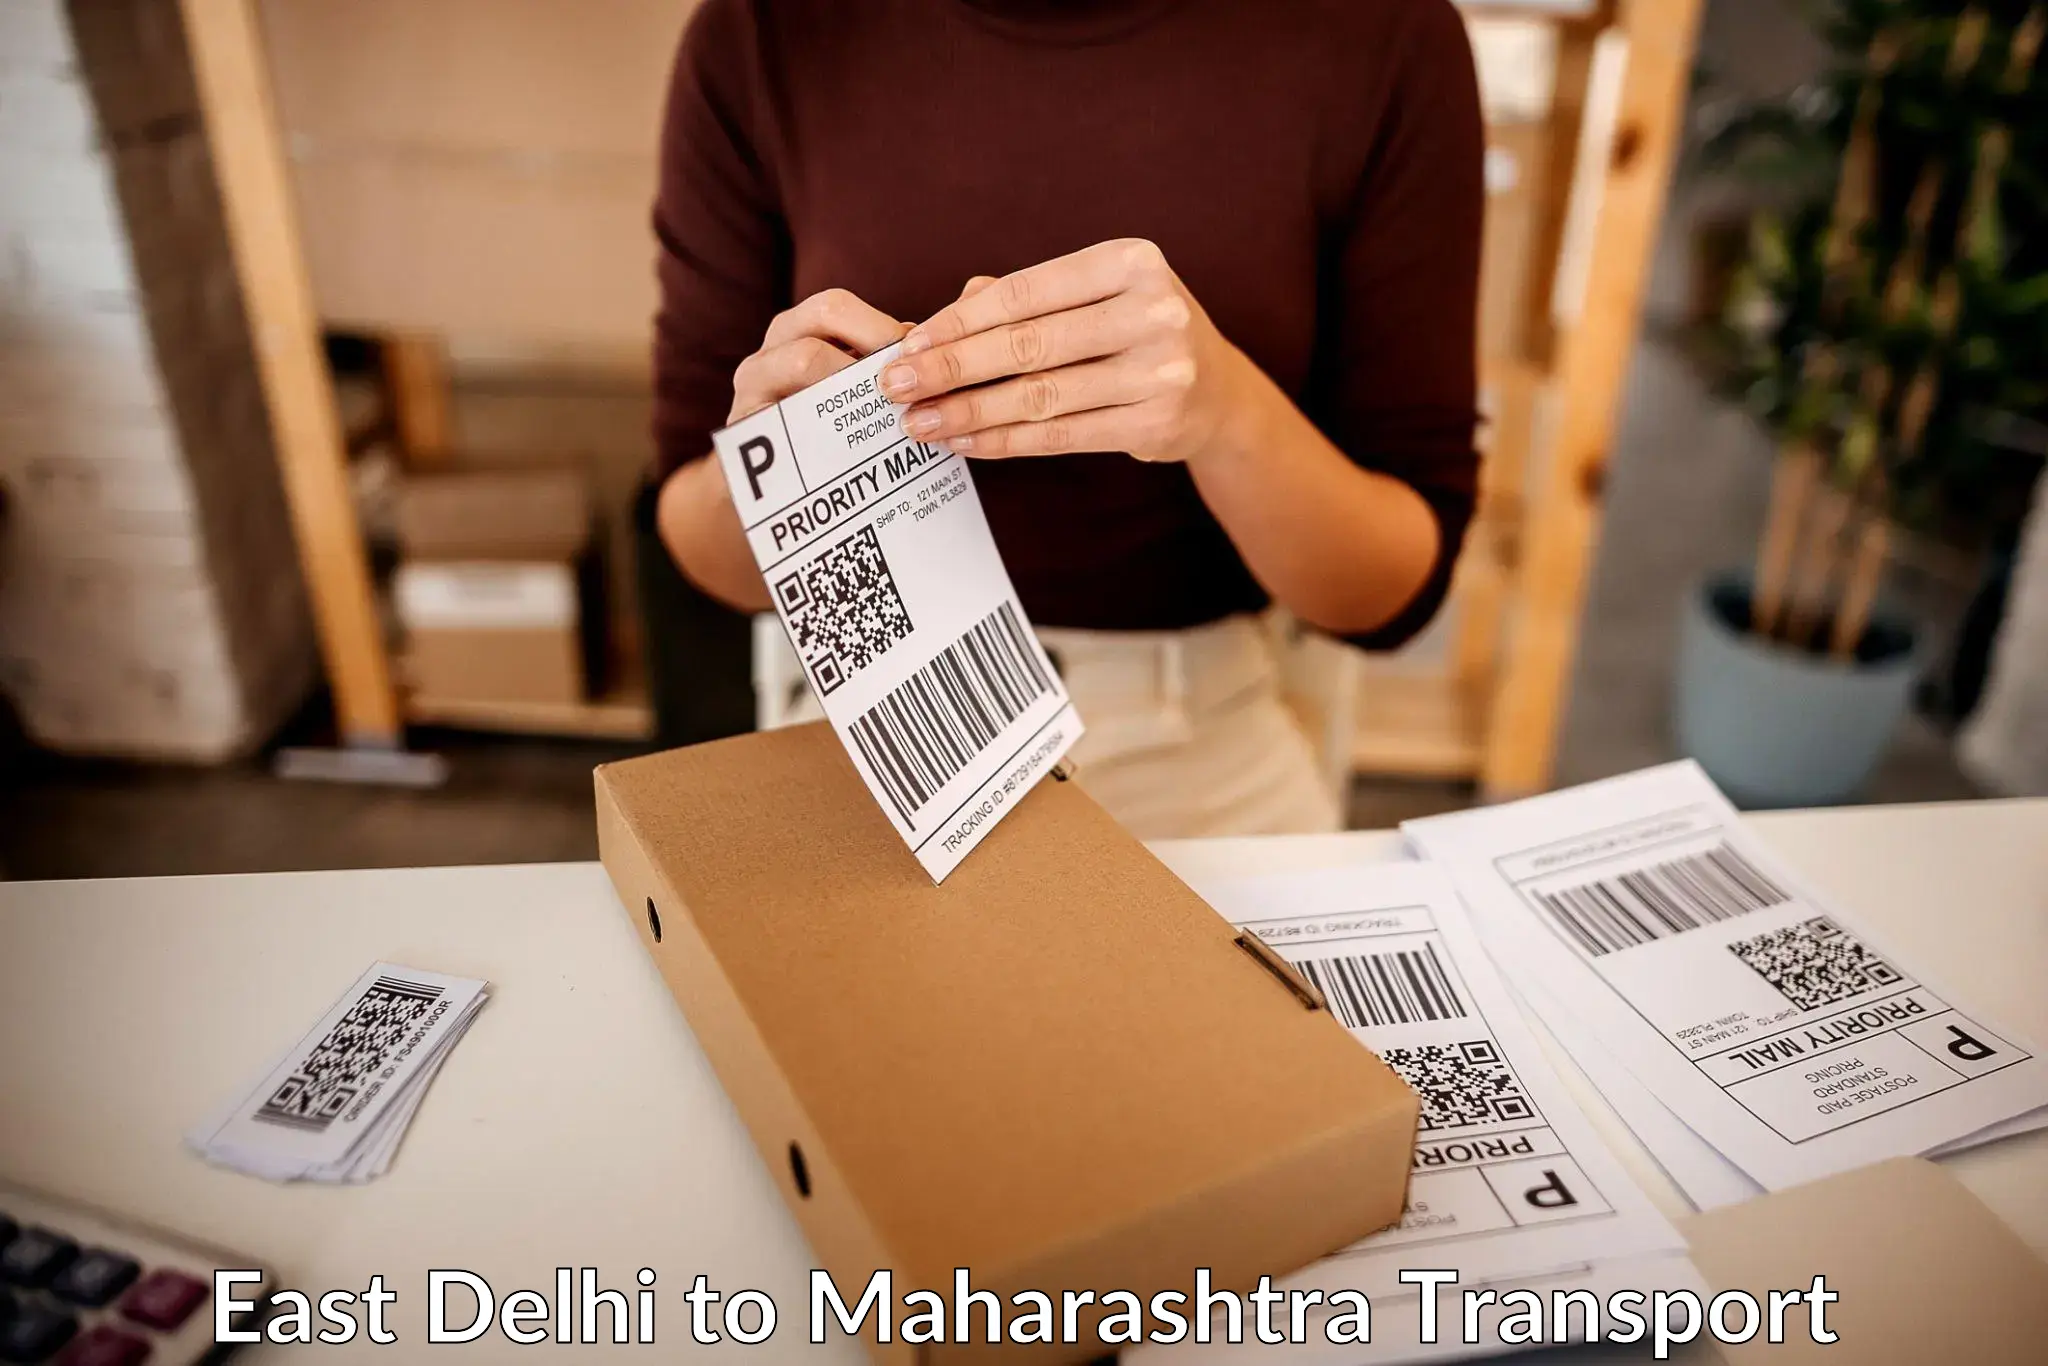 Goods delivery service East Delhi to Virar